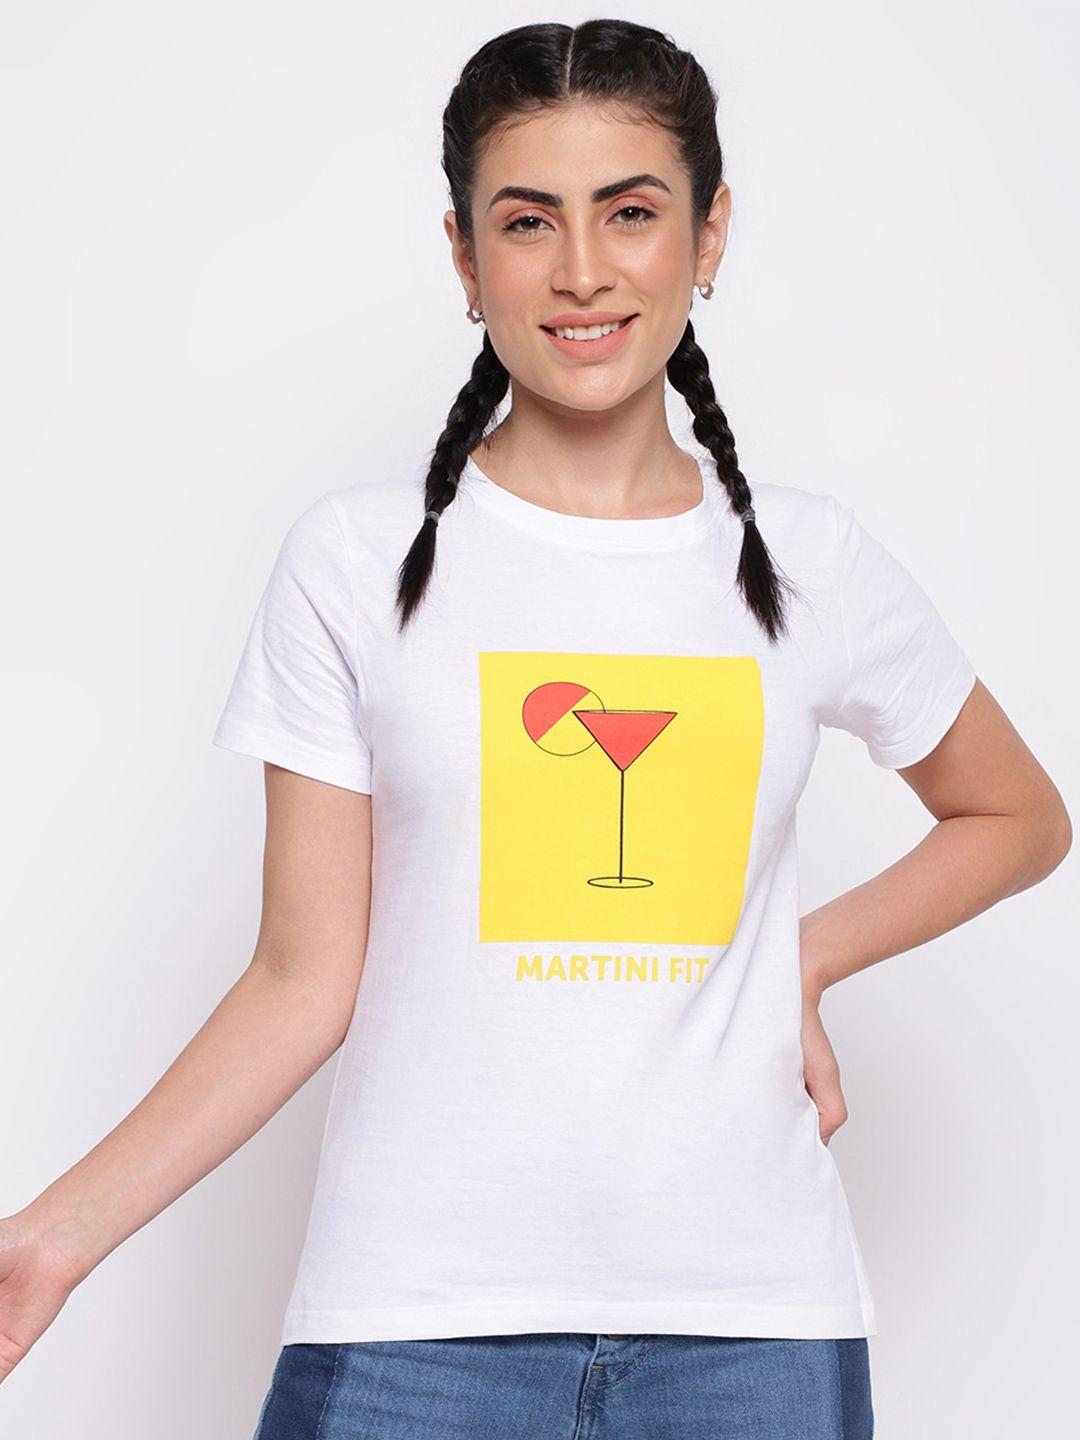 belliskey women printed cotton t-shirt